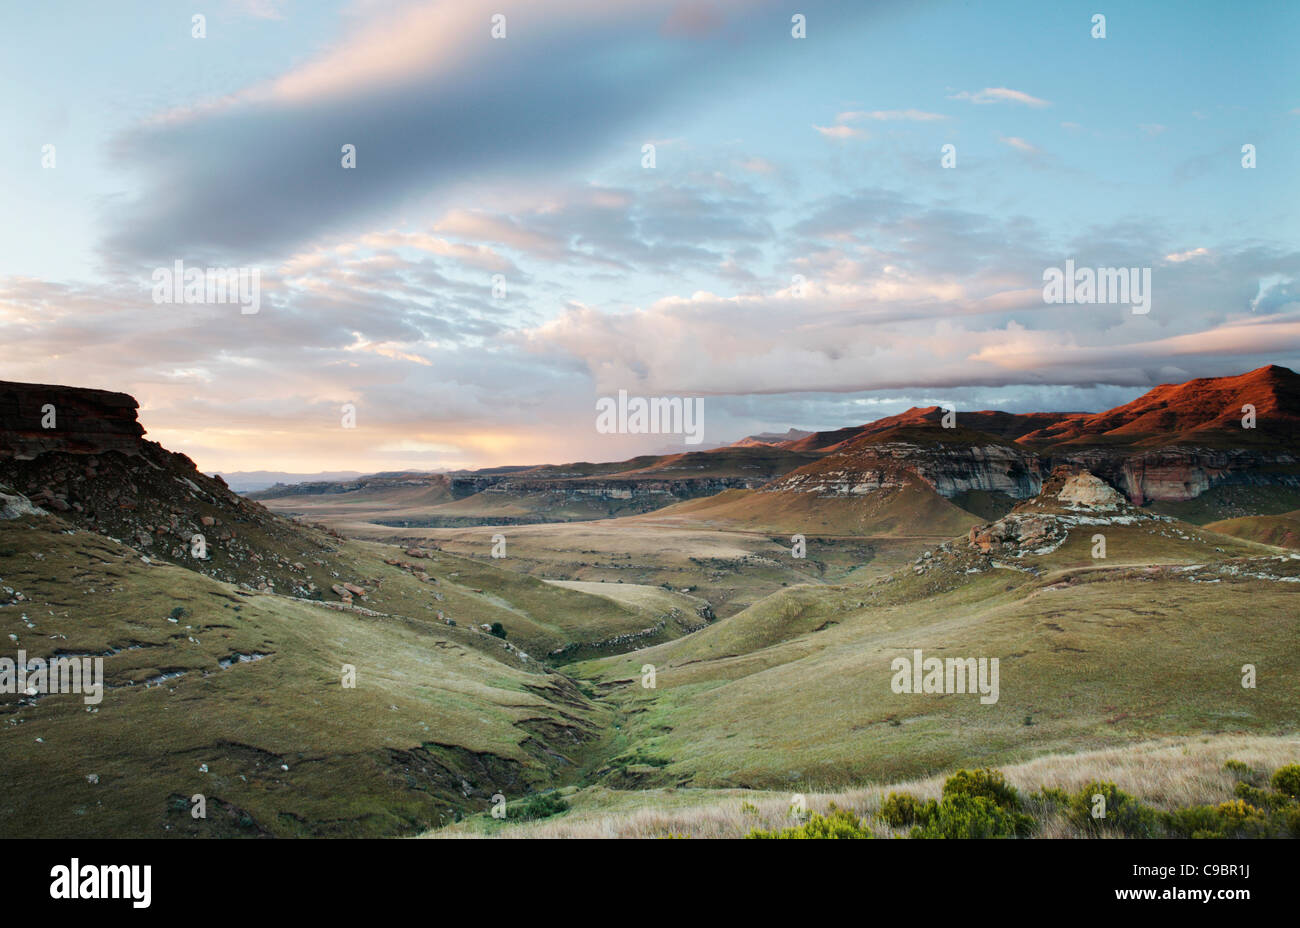 View der Maluti Mountains, Golden Gate Highlands National Park, freien Staat-Provinz, Südafrika Stockfoto